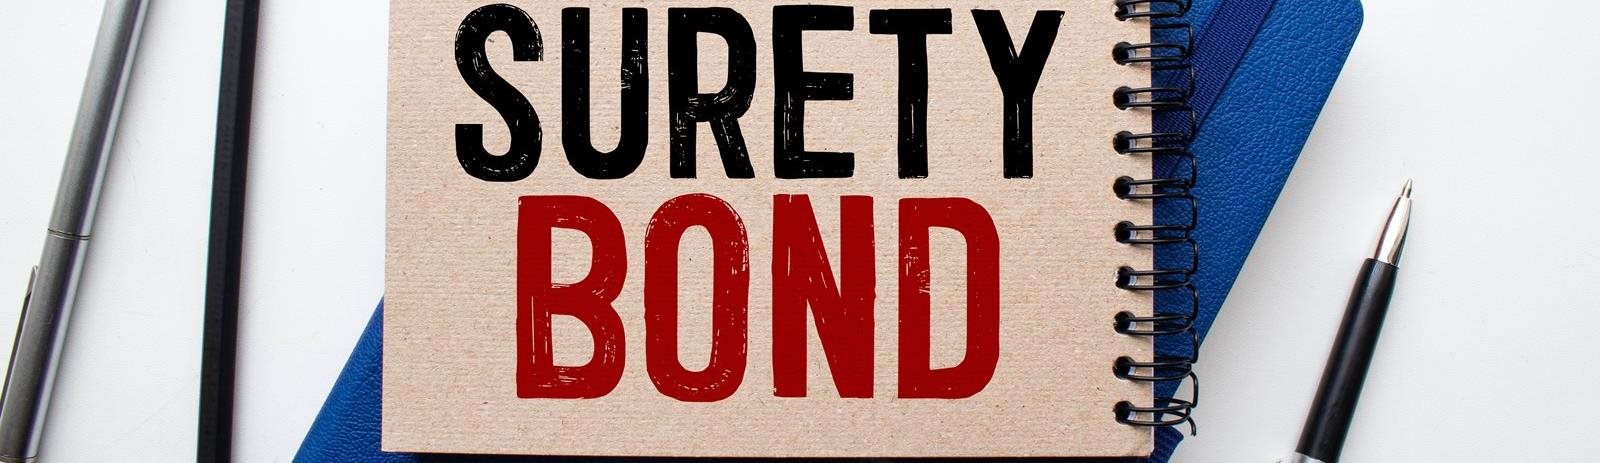 Security Bond image